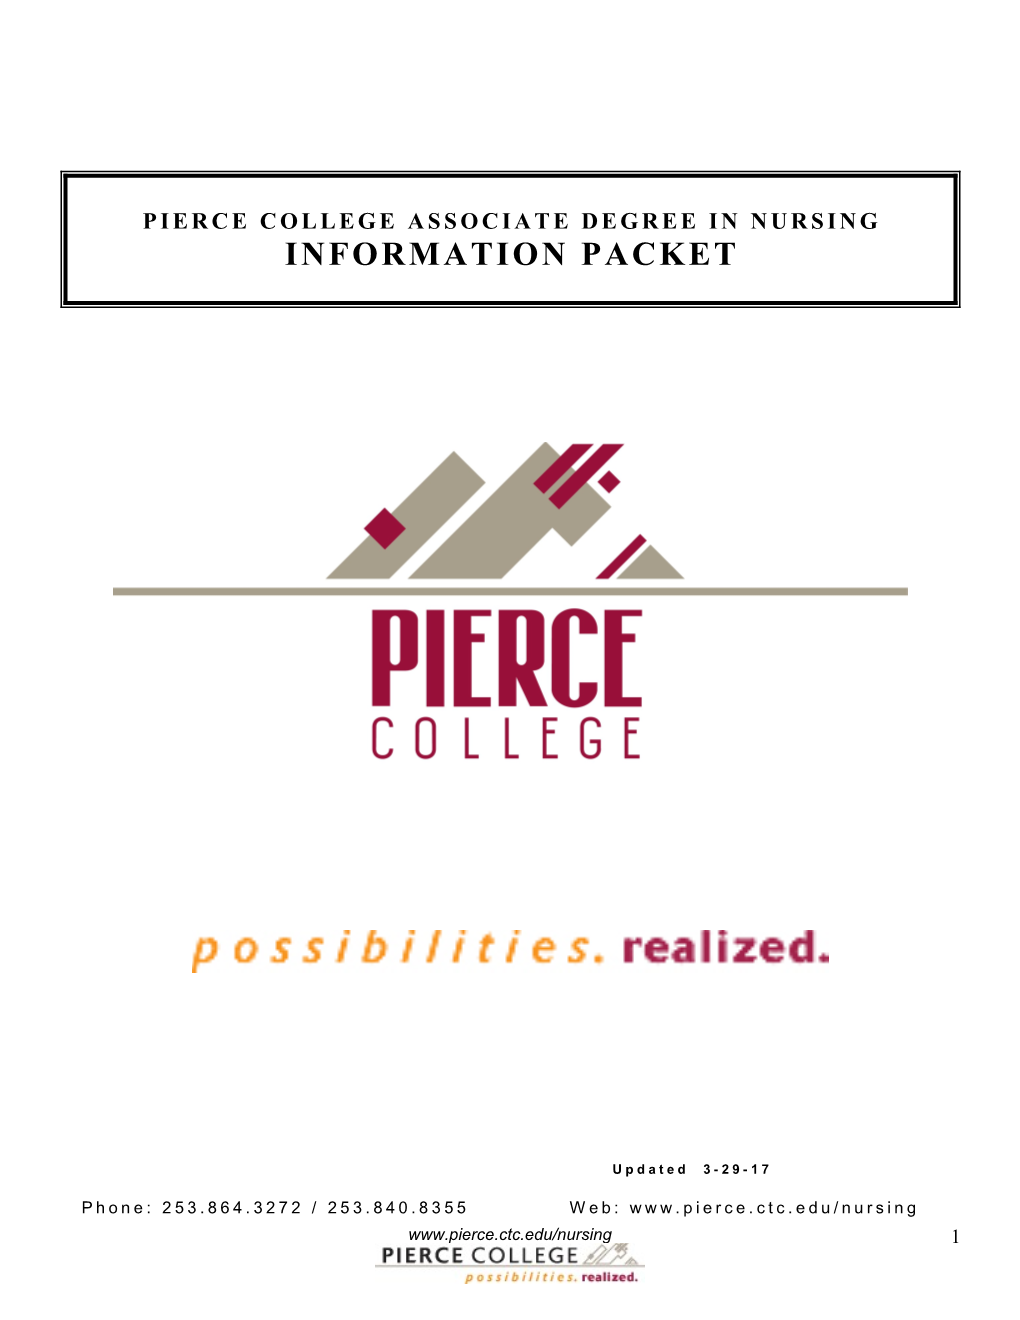 Piercecollege Associate Degree in Nursing